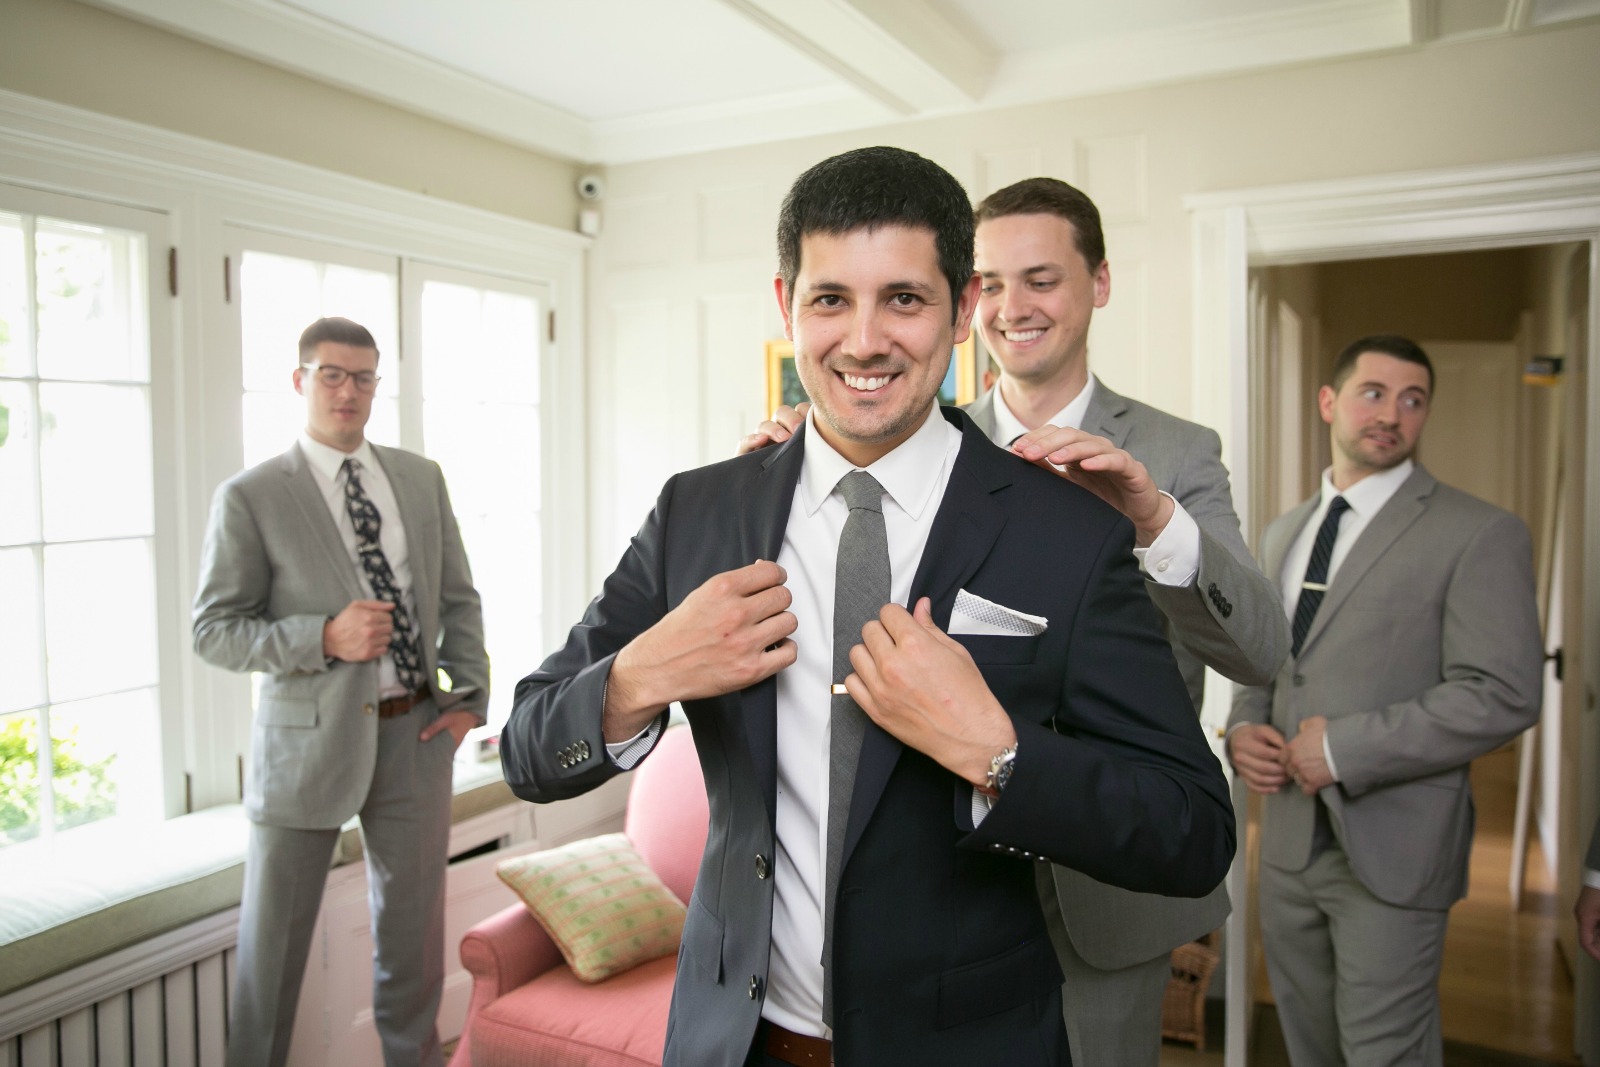 1a-groomsmen-getting-ready